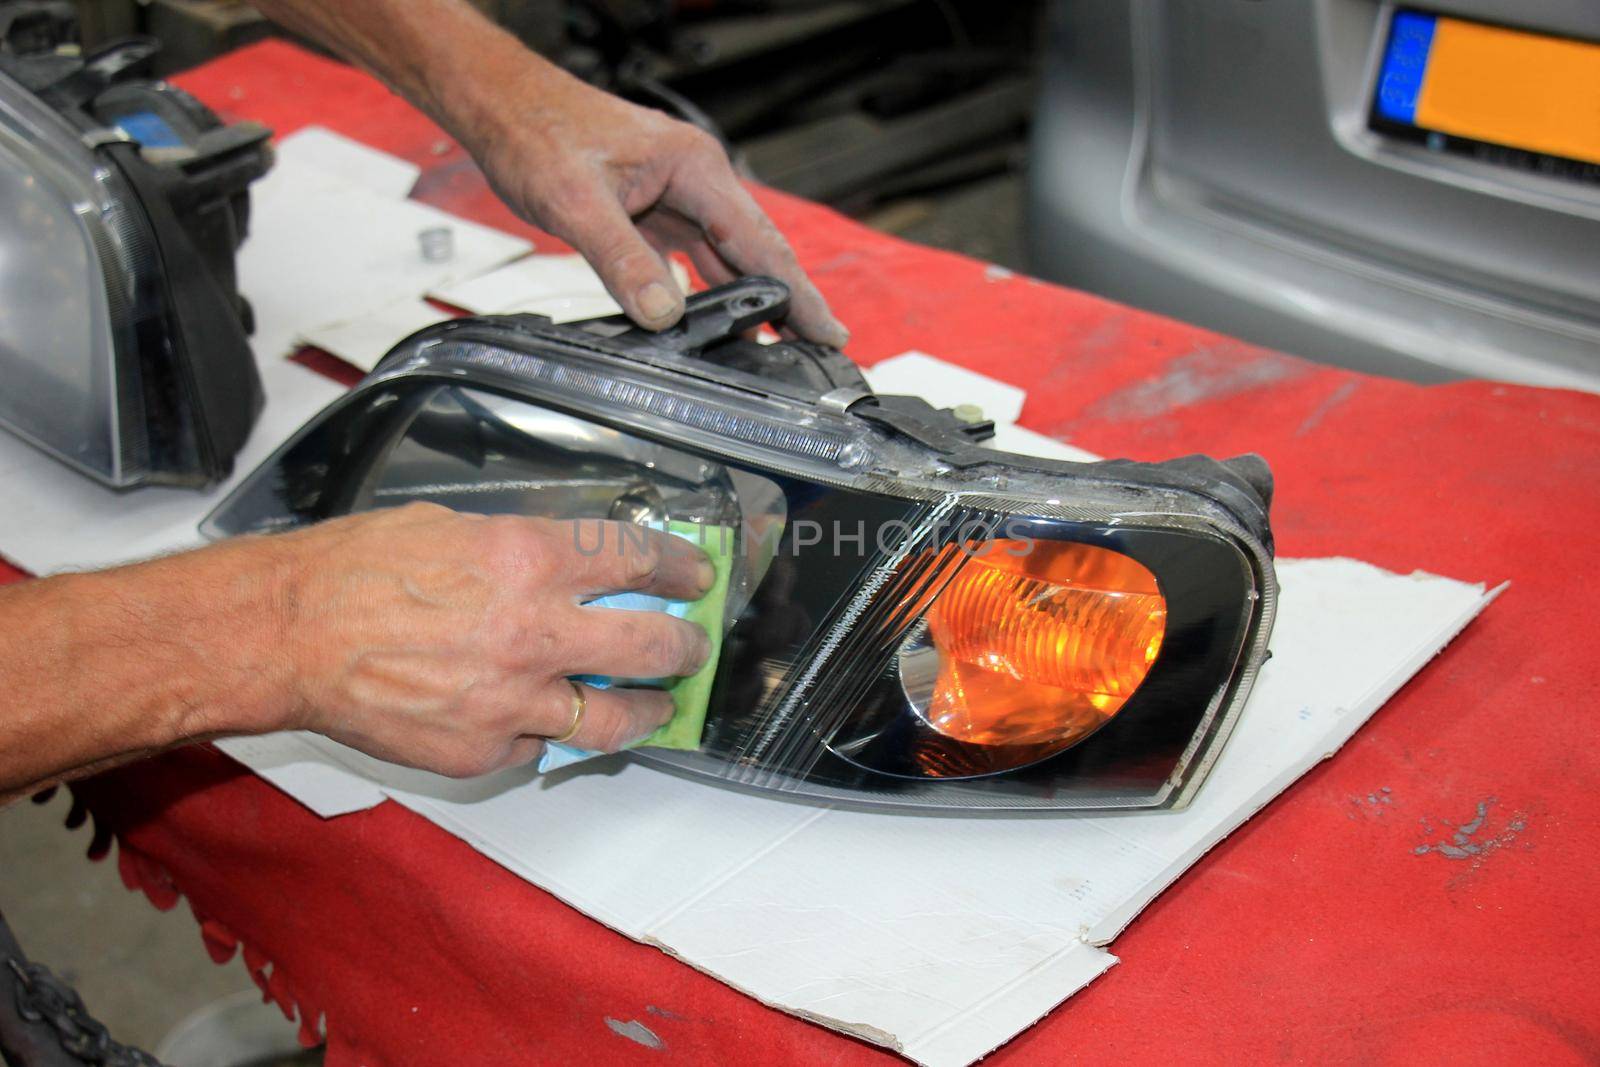 Man refurbishing a car headlight with clear coating